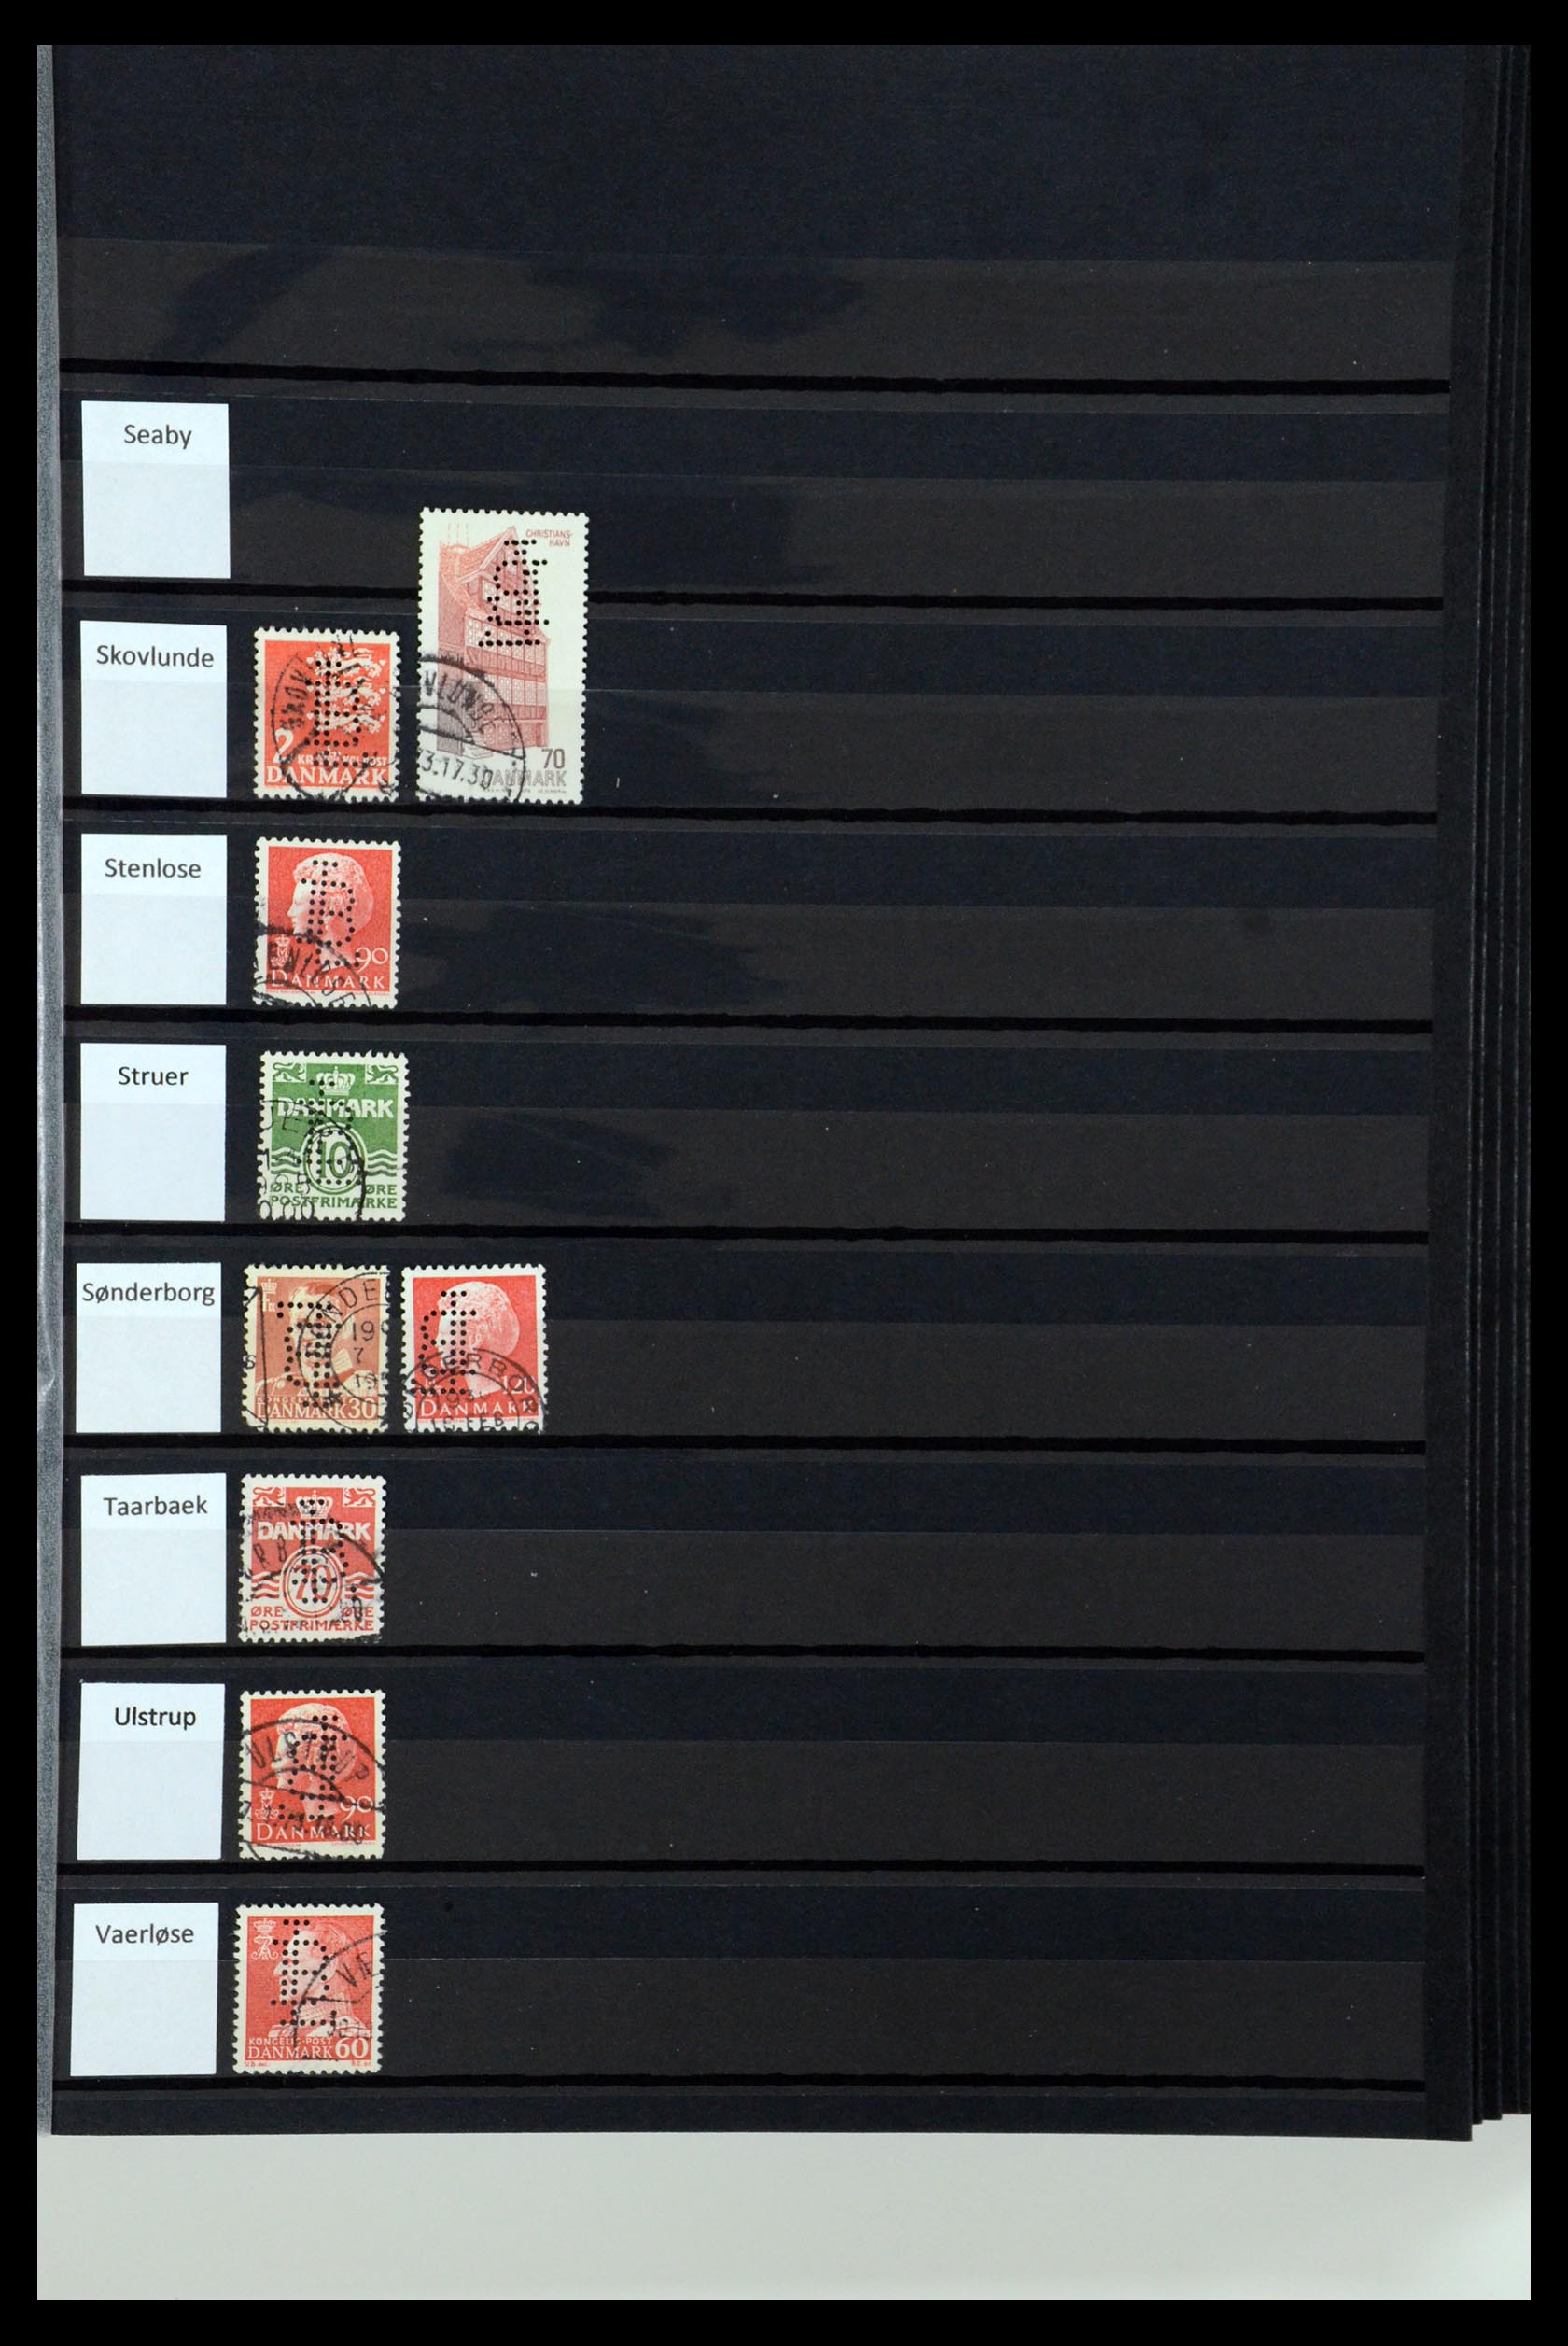 36396 092 - Stamp collection 36396 Denmark perfins.